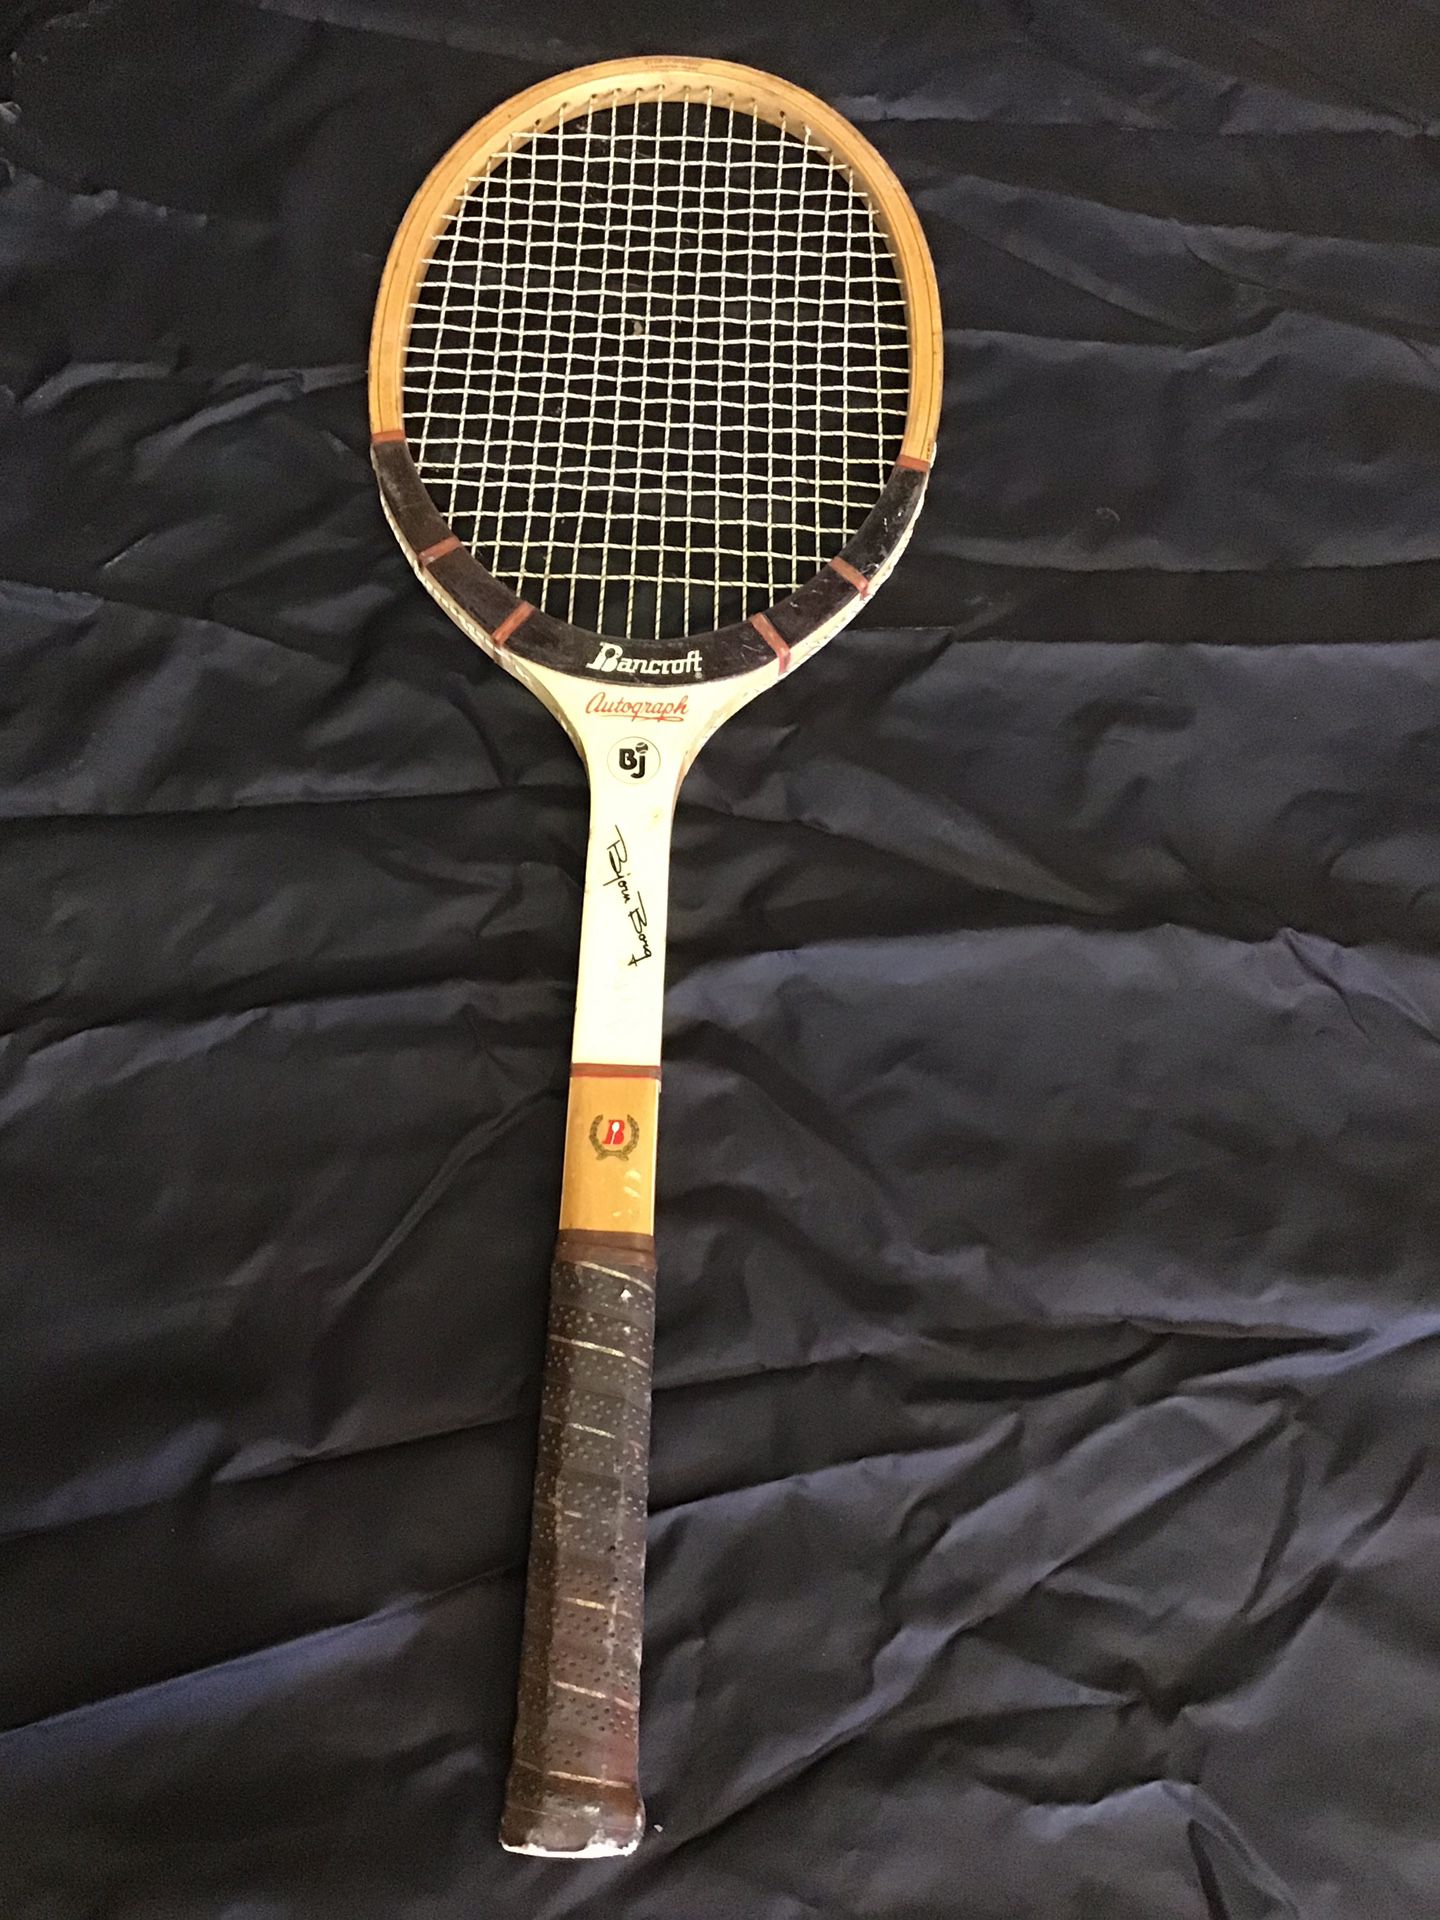 Tennis racket, Bancroft. Bjorn Borg